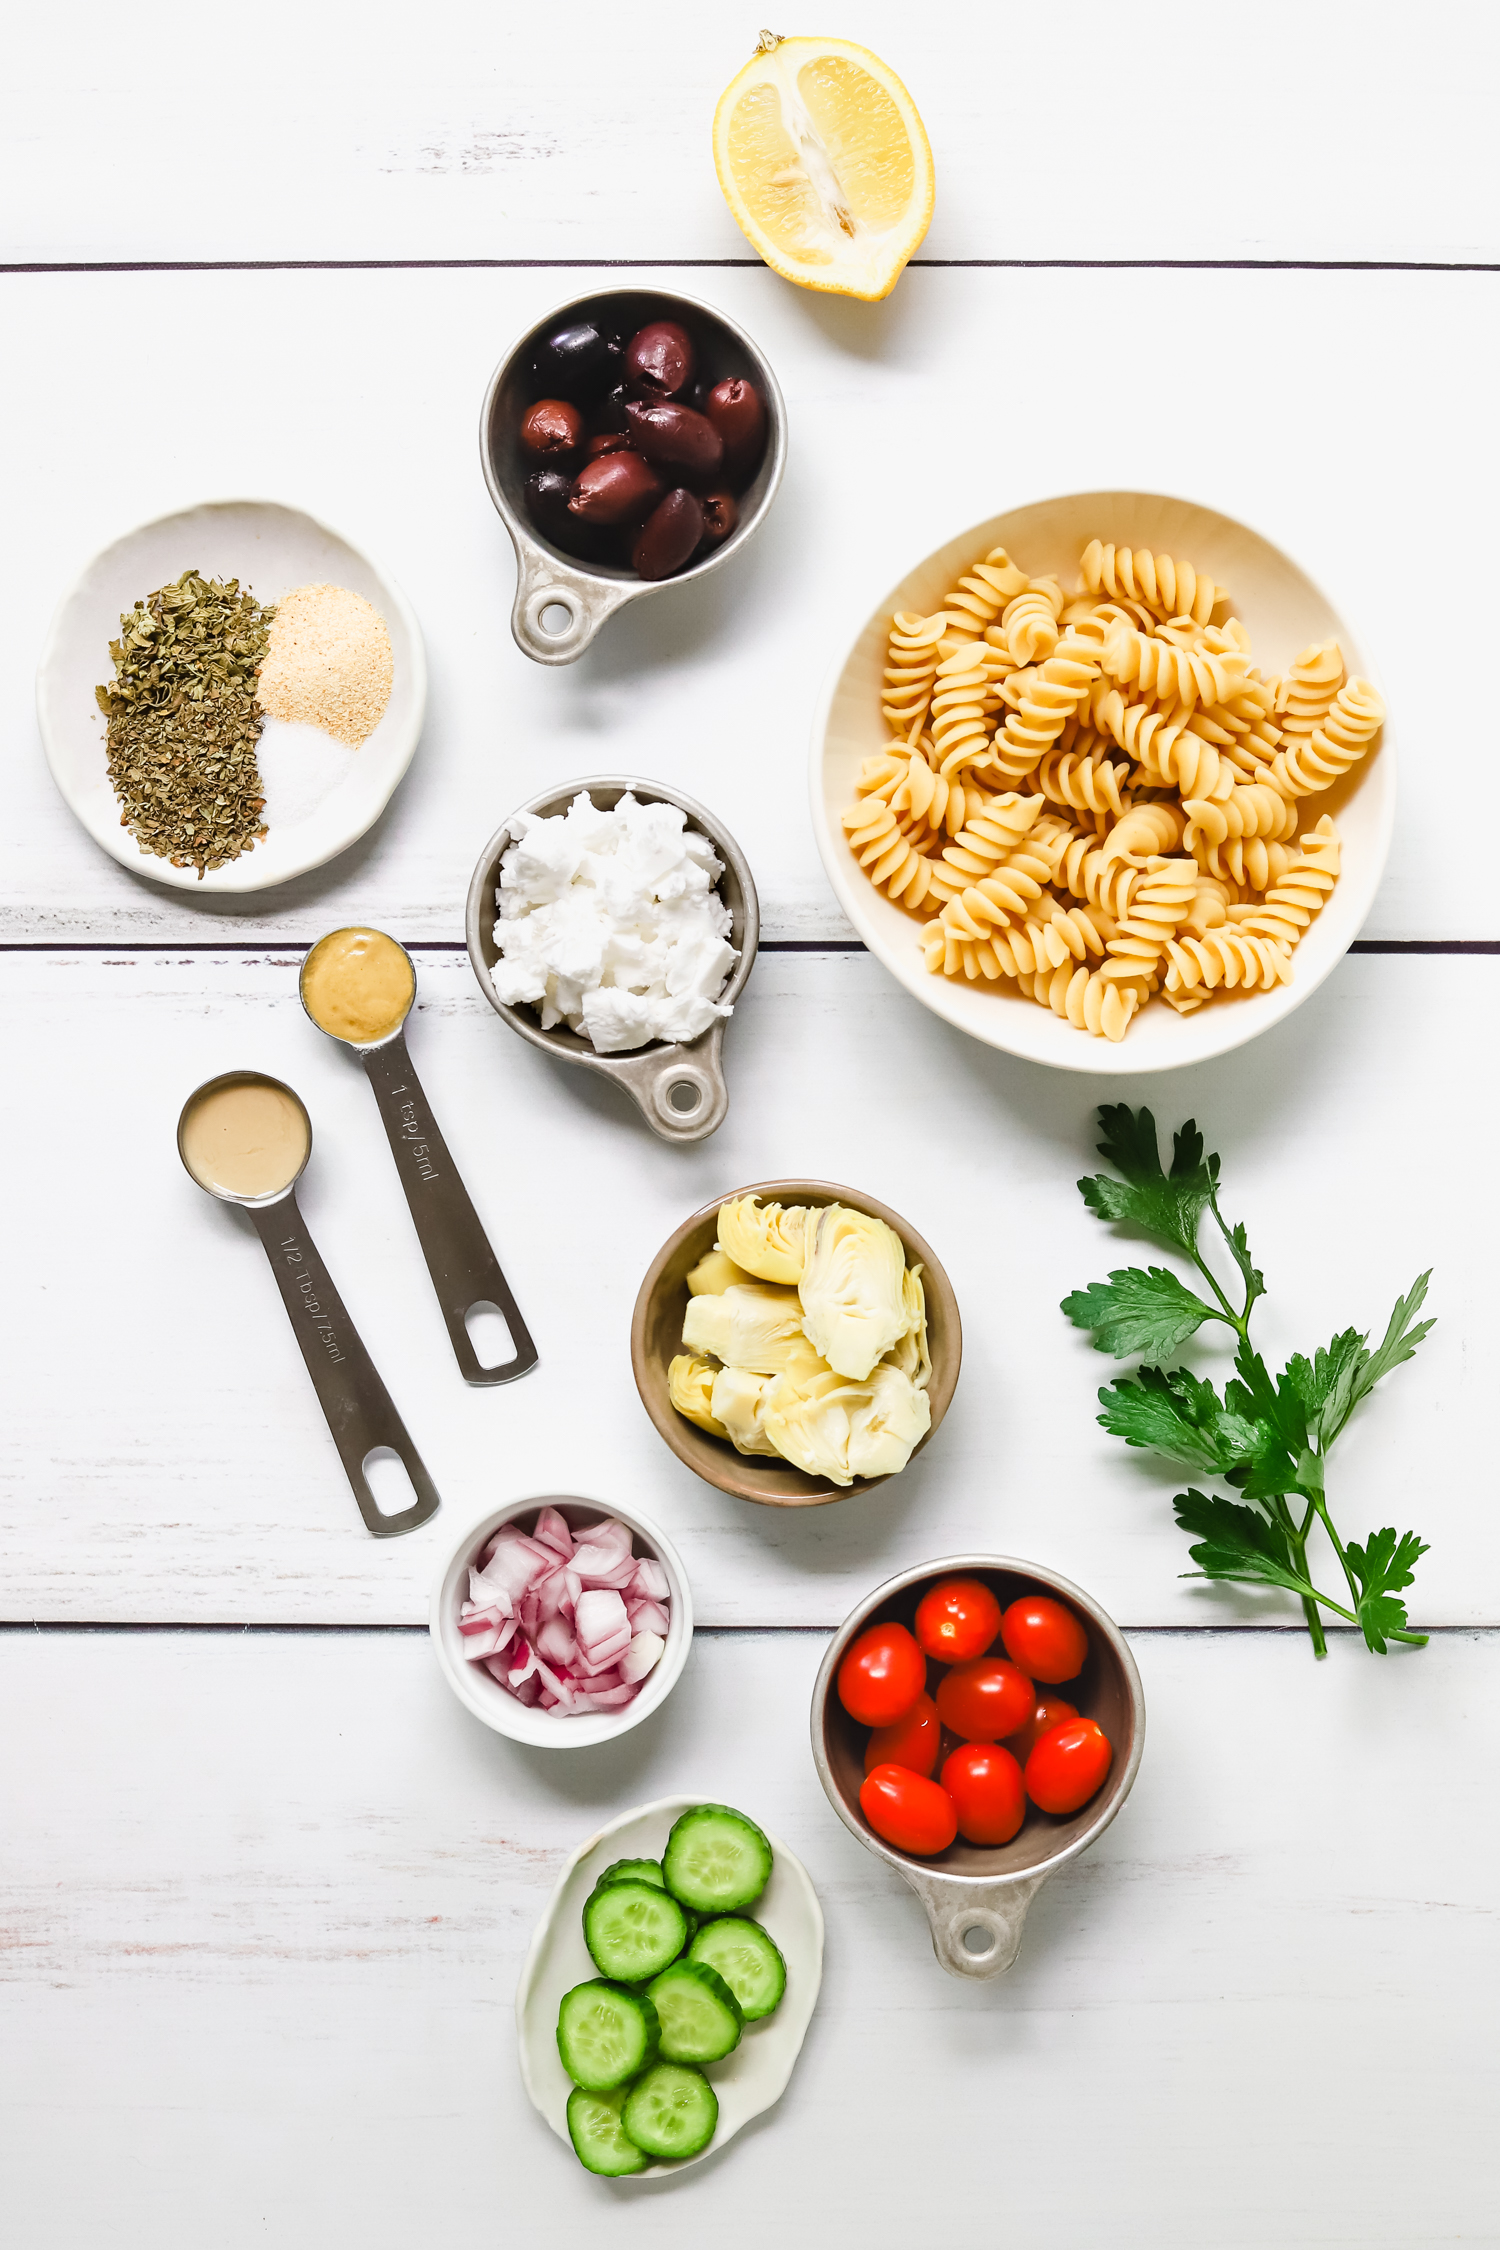 Ingredients for greek pasta salad: pasta, kalamata olives, cucumber, tomatoes, artichoke hearts, red onions, parsley, and vegan feta